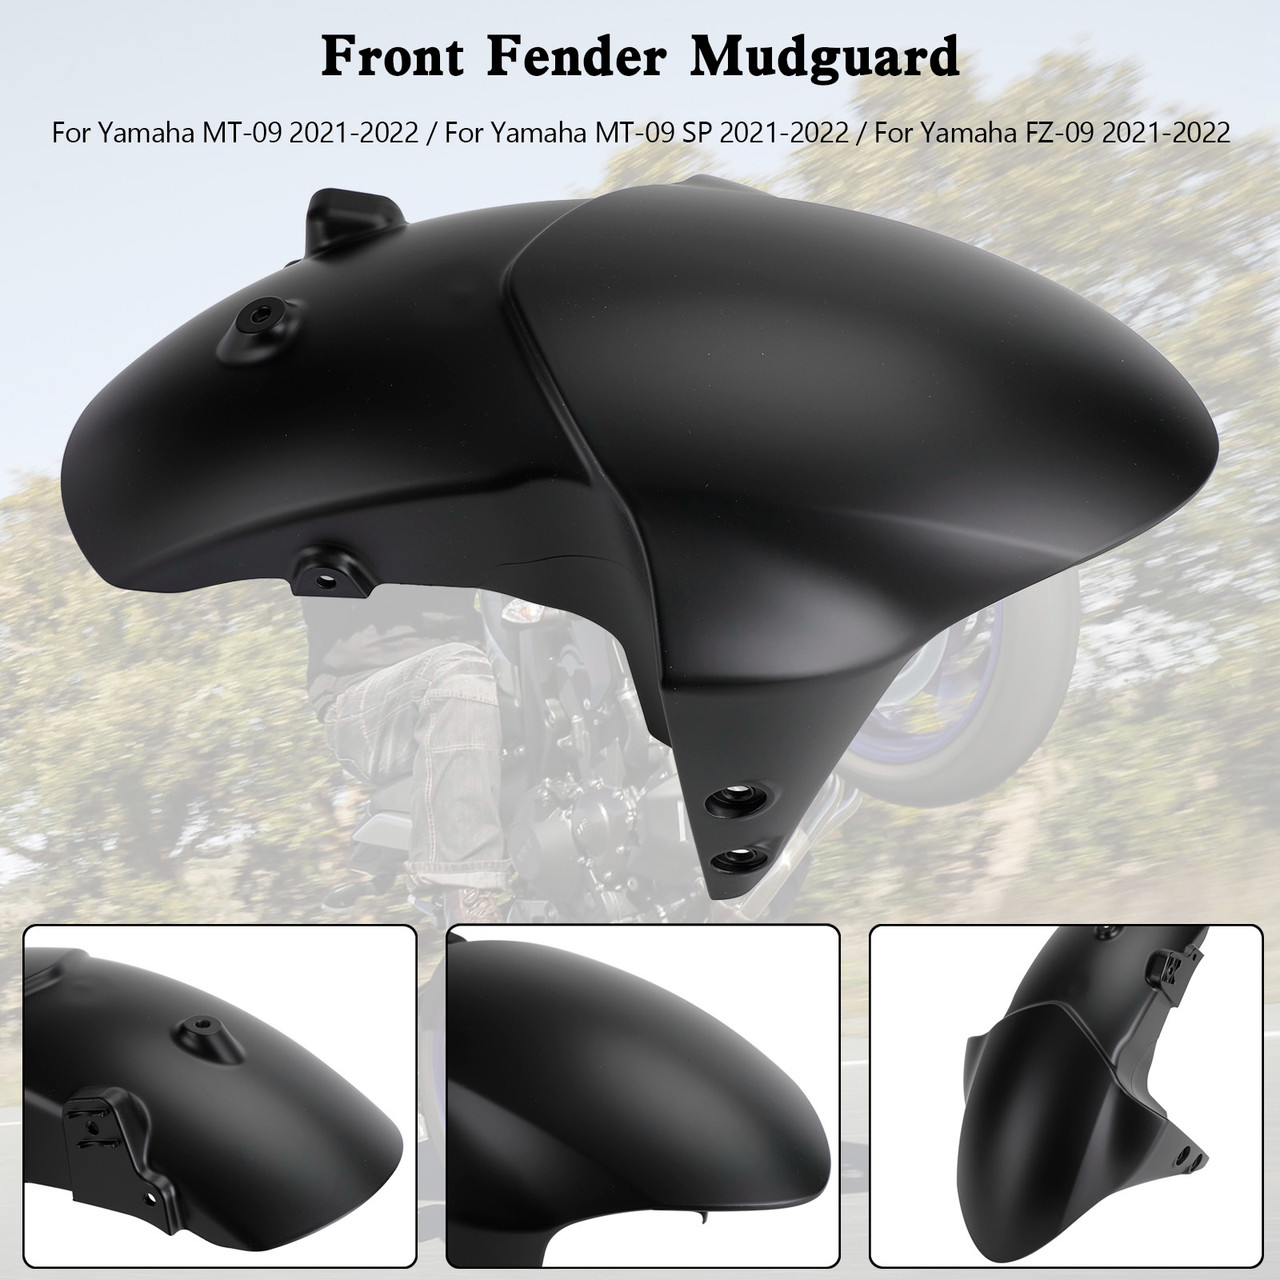 Front Fender Mudguard Fairing For Yamaha MT-09 FZ-09 MT09 SP 2021-2022 MBLACK